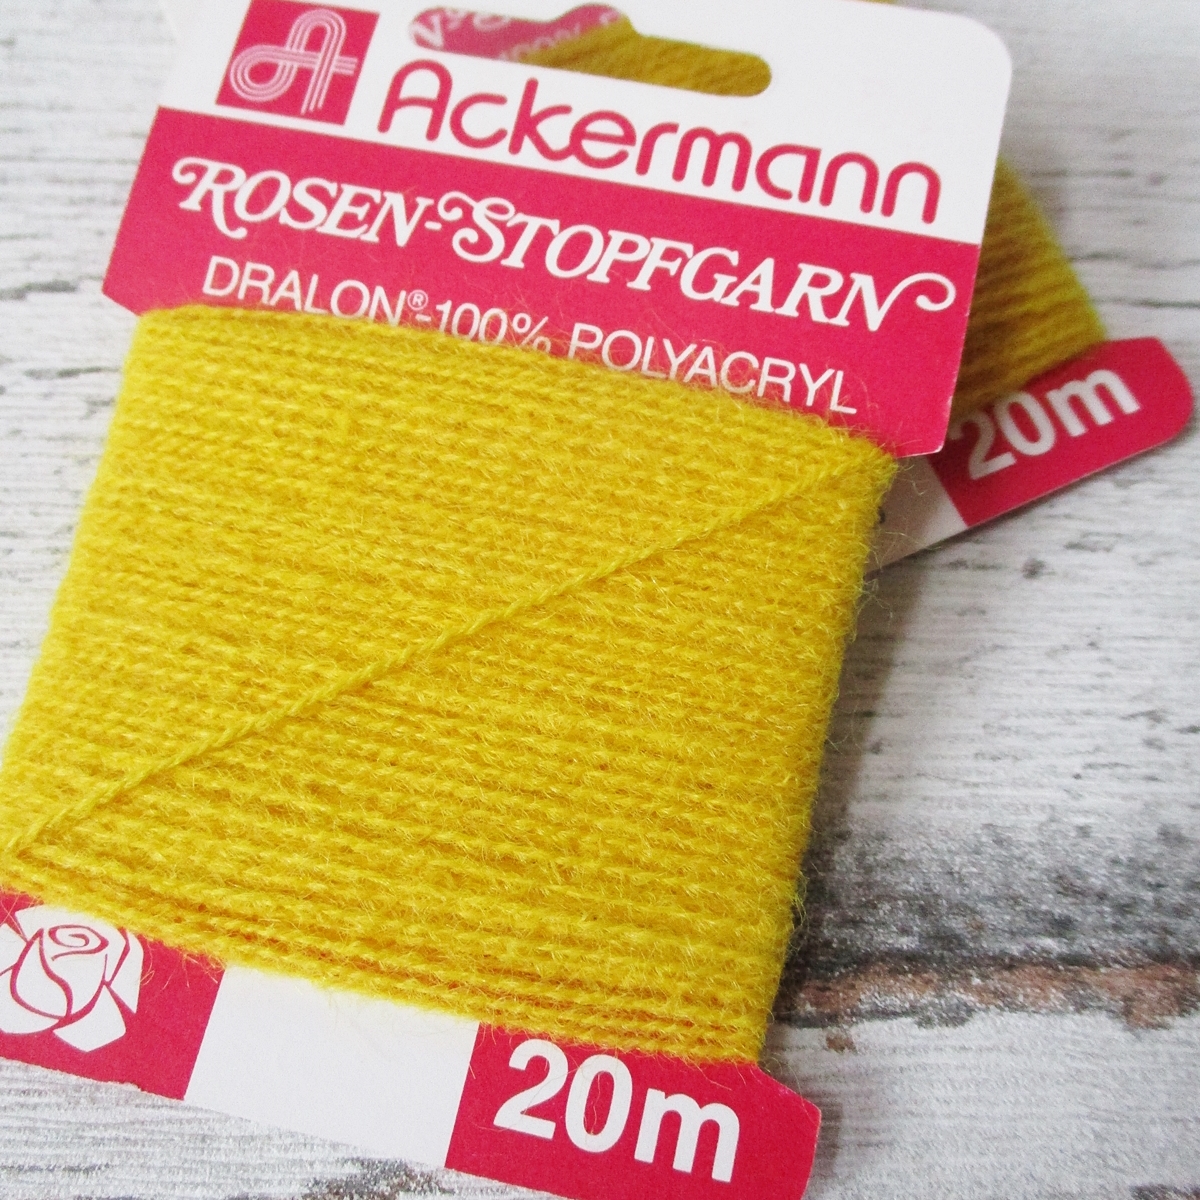 Rosen-Stopfgarn Ackermann Dralon Polyacryl 20m Farbe_0620 vanillegelb - Woolnerd